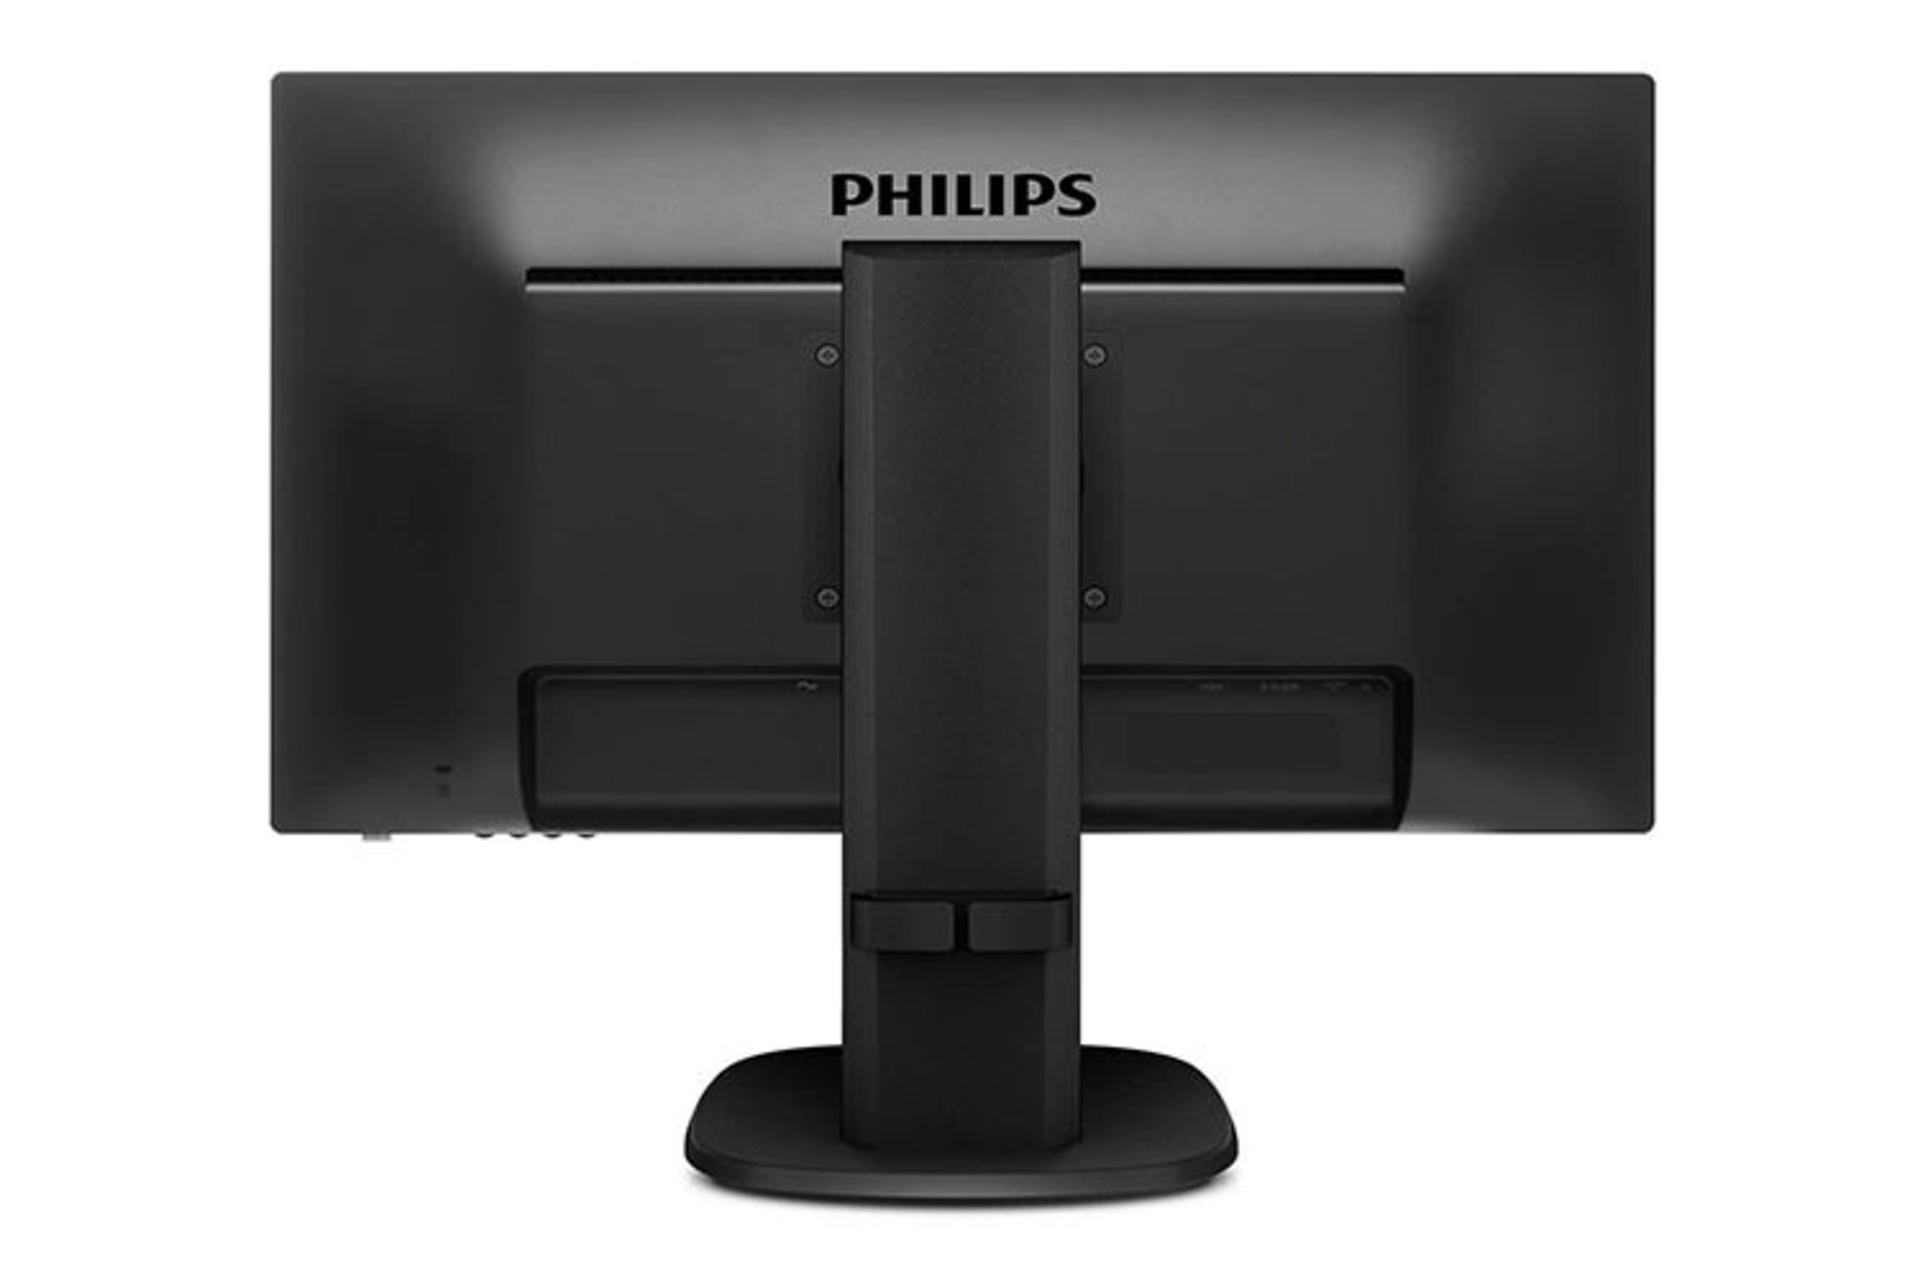 Philips 243S5LHMB